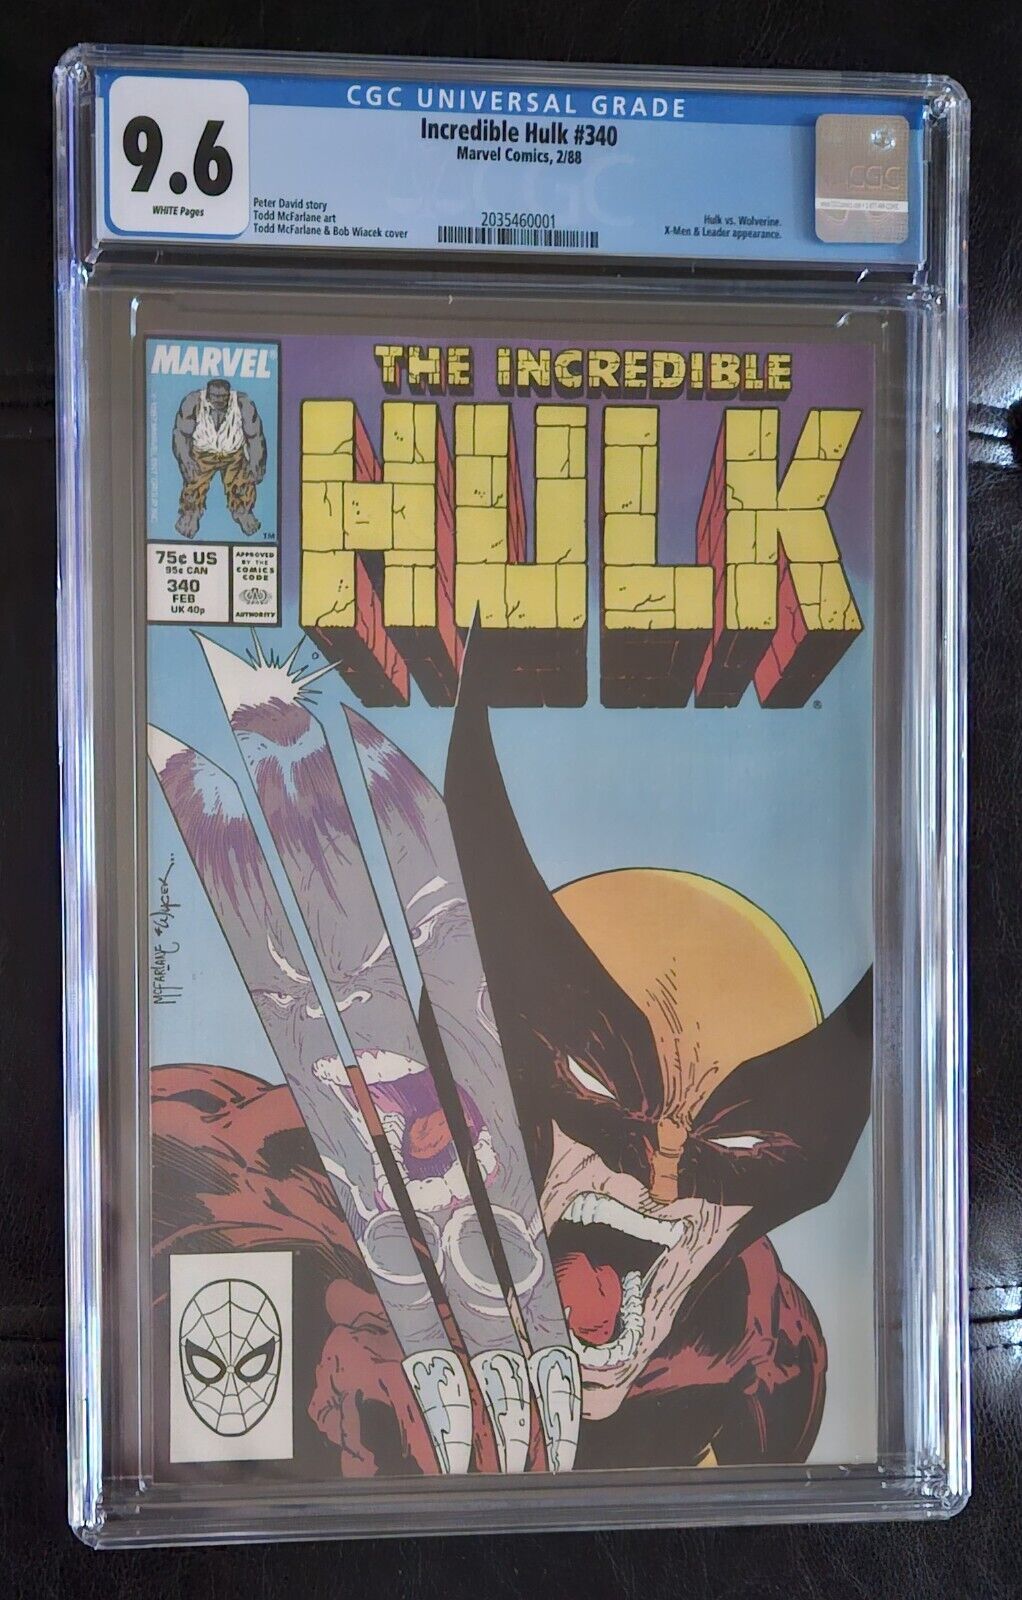 Incredible Hulk #340 - CGC 9.6 - Hulk vs. Wolverine - McFarlane - 2/88 - Marvel